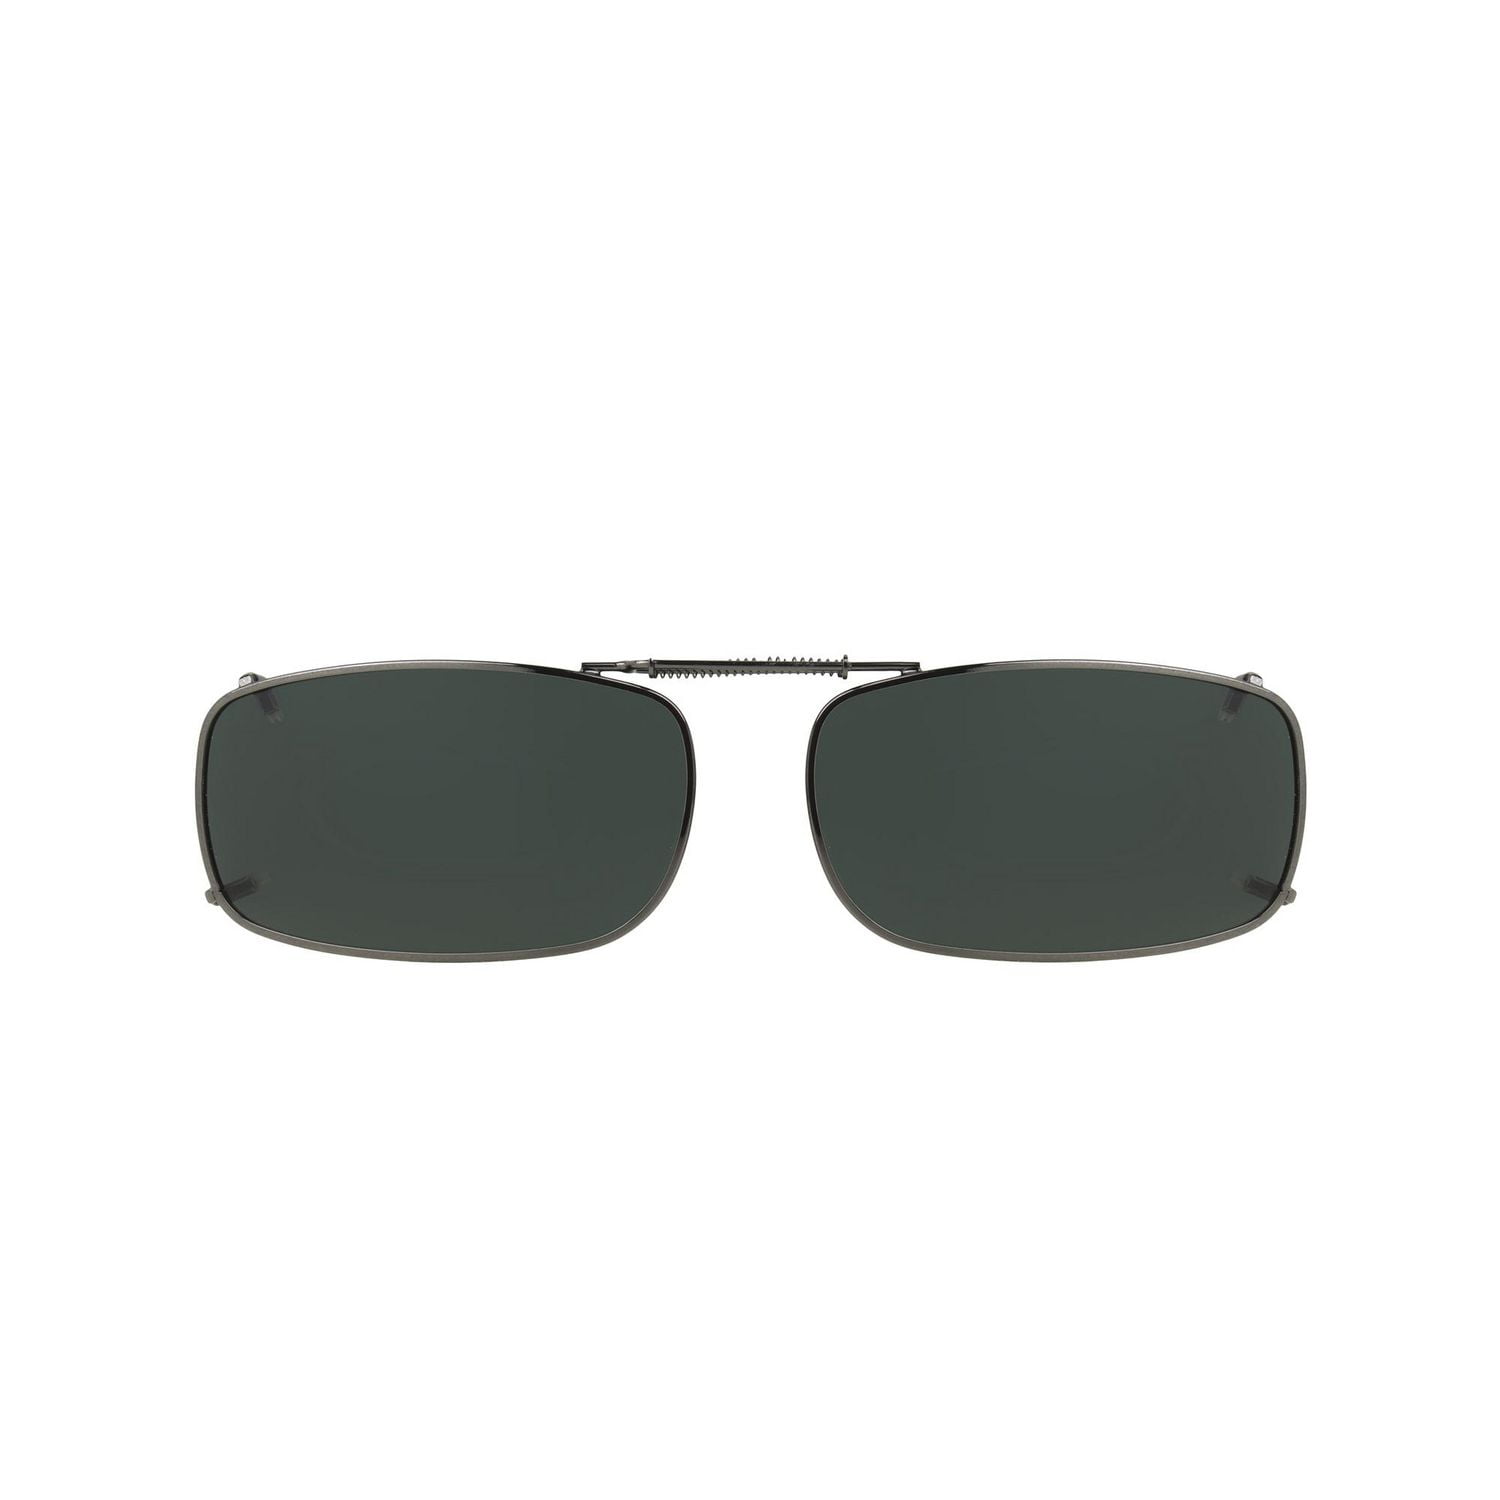 Foster Grant Polar Optics Clipons Sunglasses 